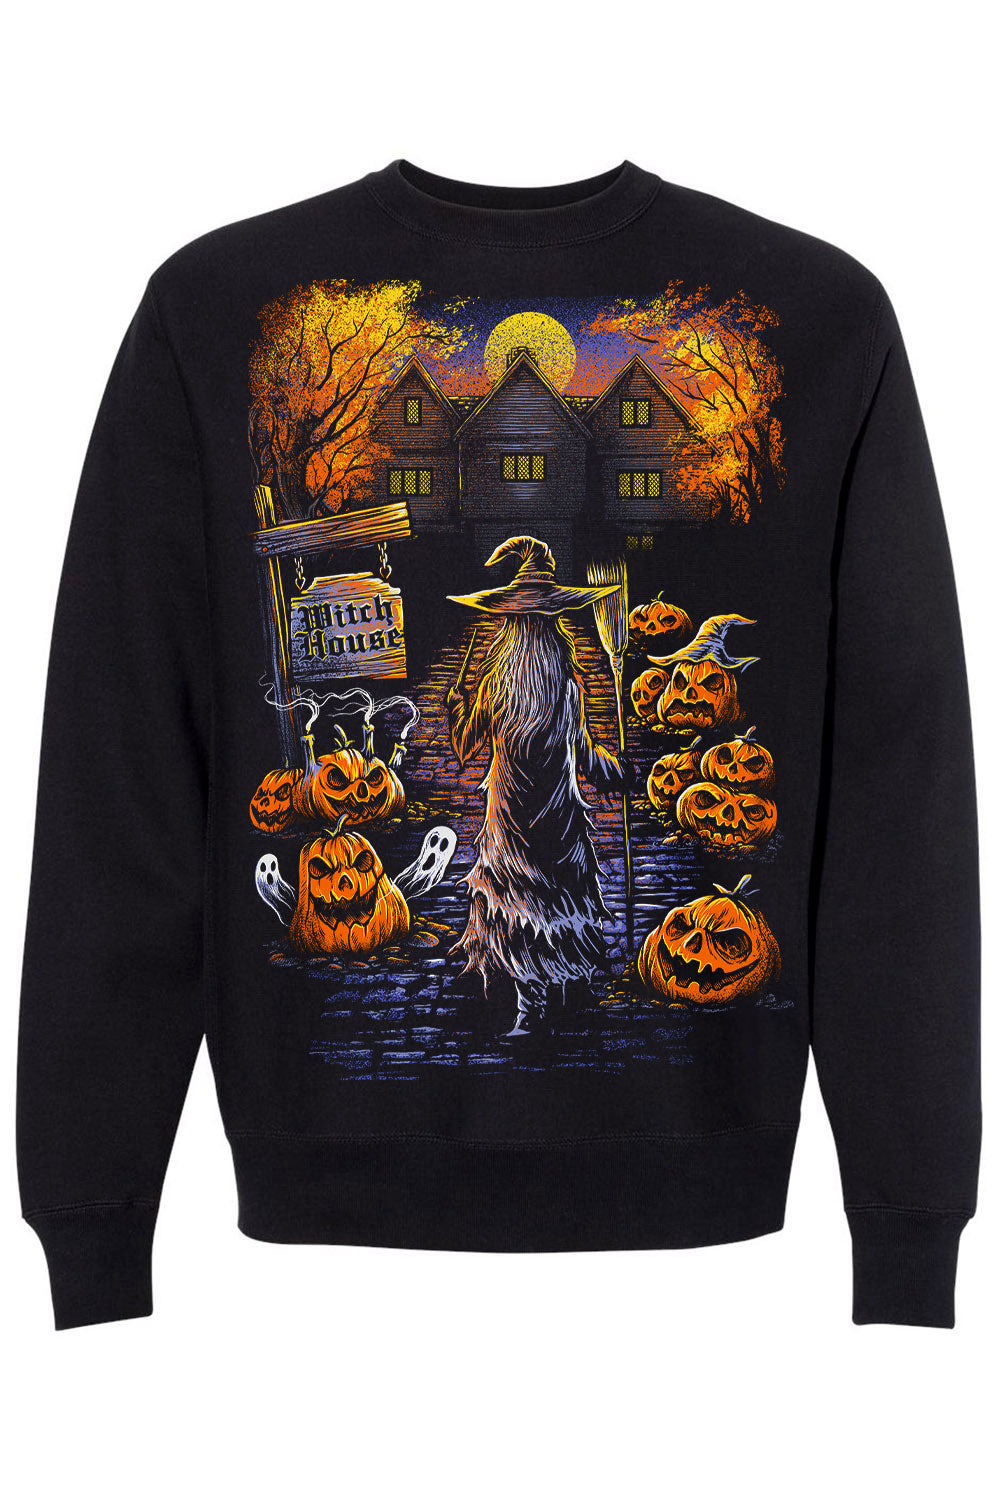 salem witch house sweater